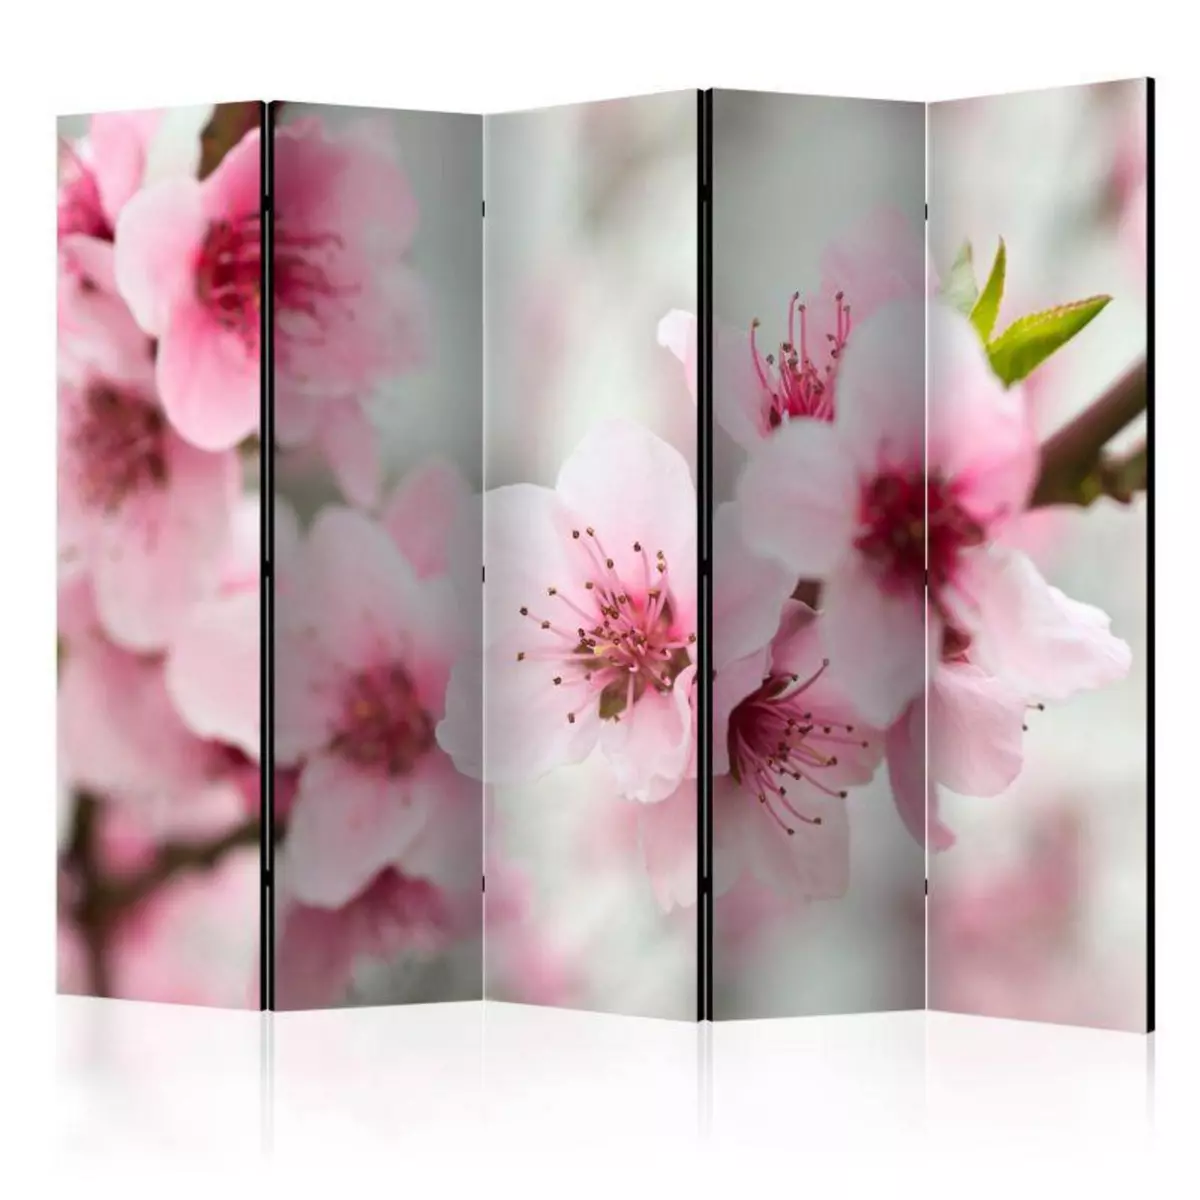 Paris Prix Paravent 5 Volets  Spring Blooming Tree Pink Flowers  172x225cm